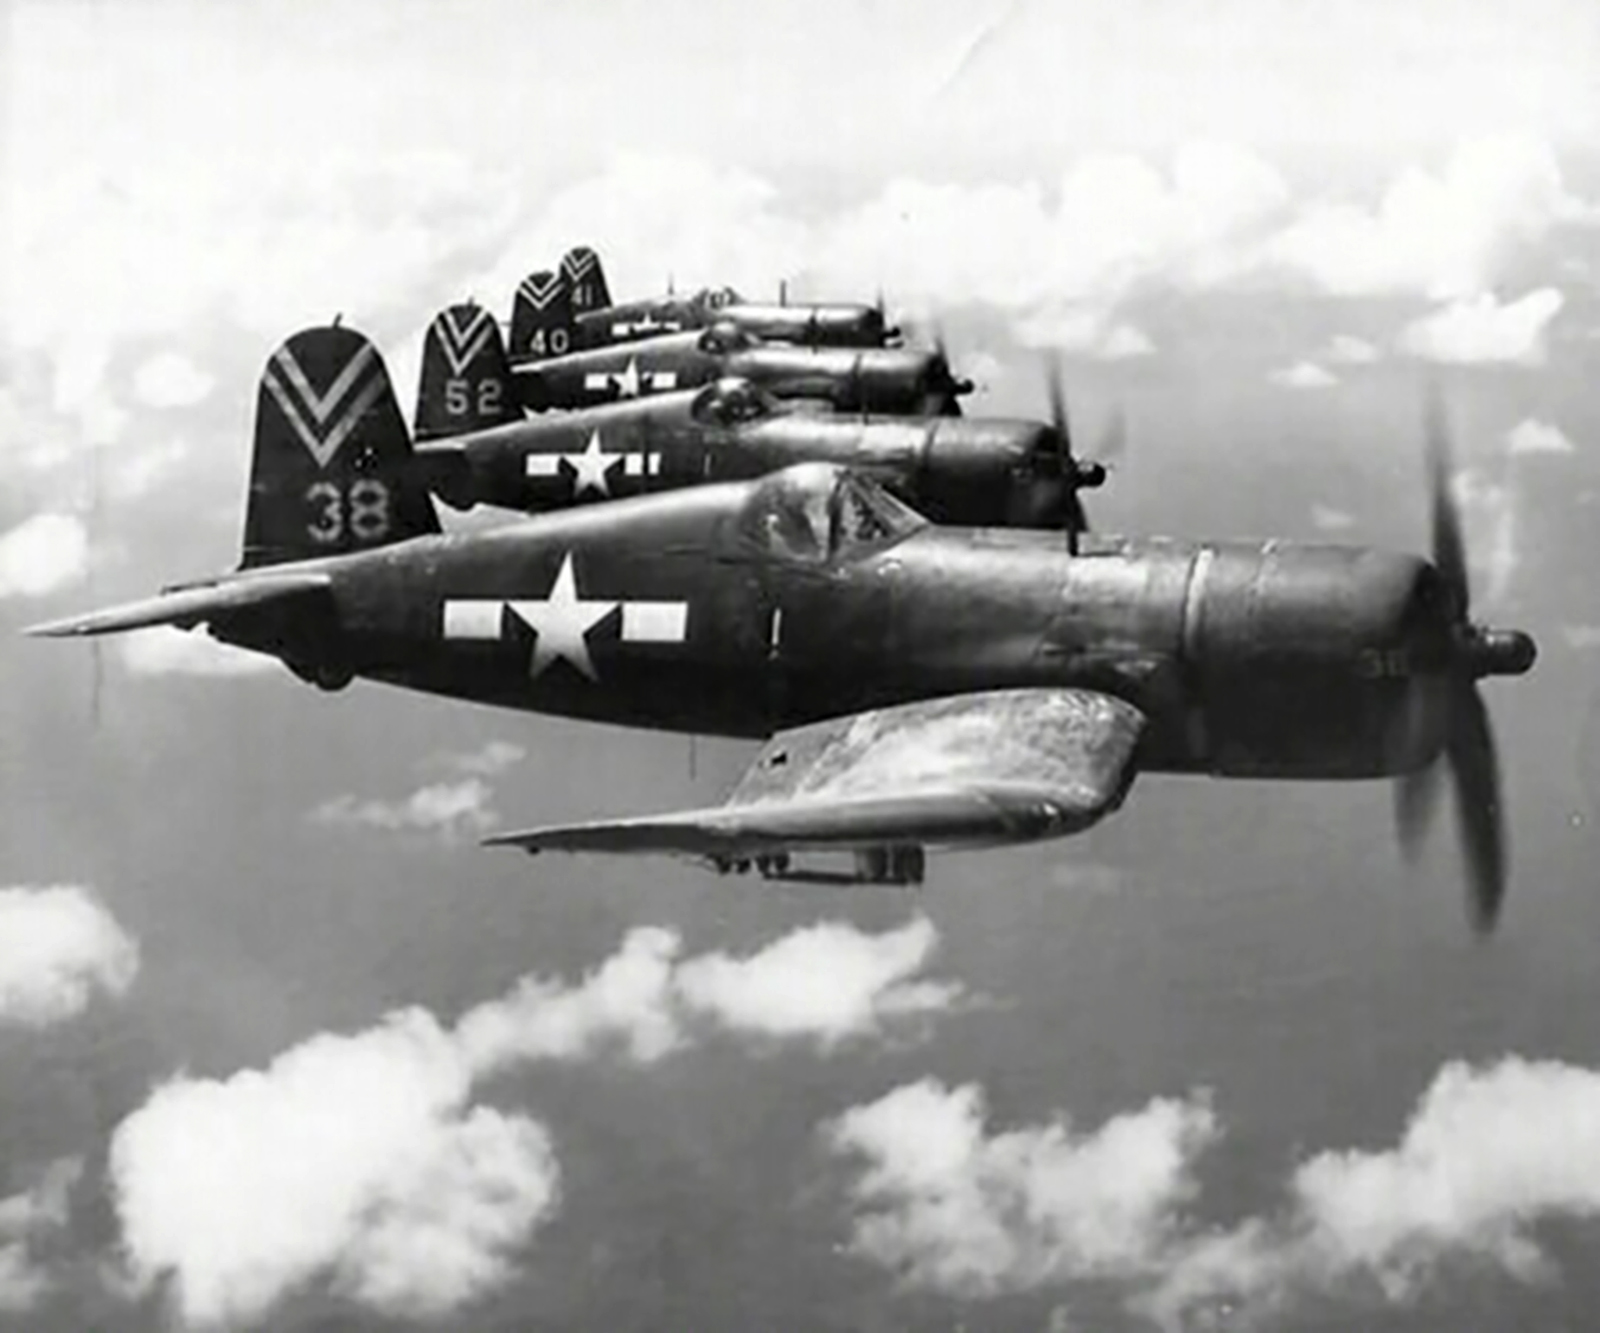 Vought-AU-1-Corsair-VBF-93-White-38-52-4